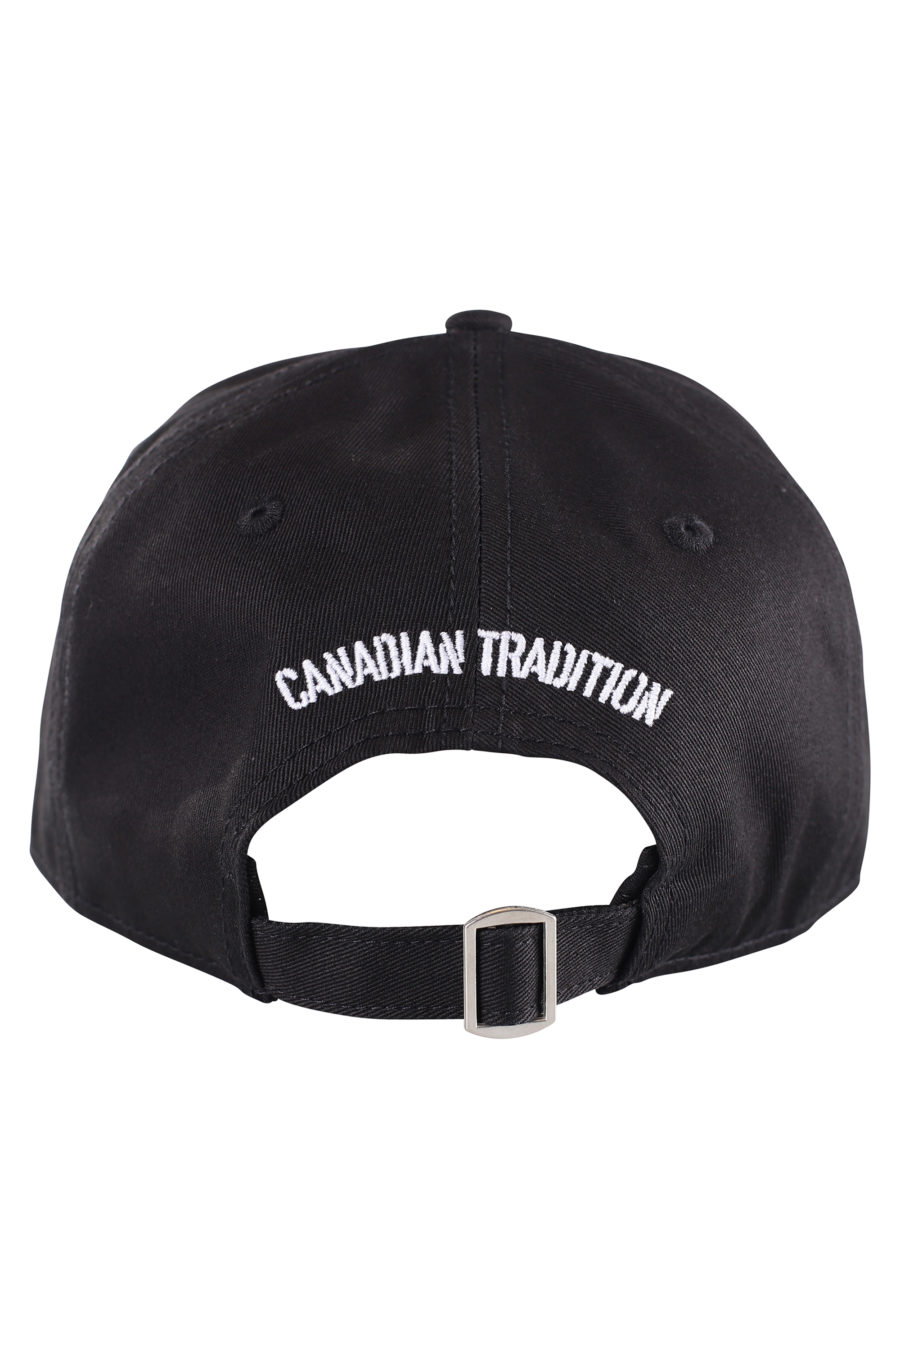 Gorra negra ajustable con logo desgastado blanco grande - IMG 9620